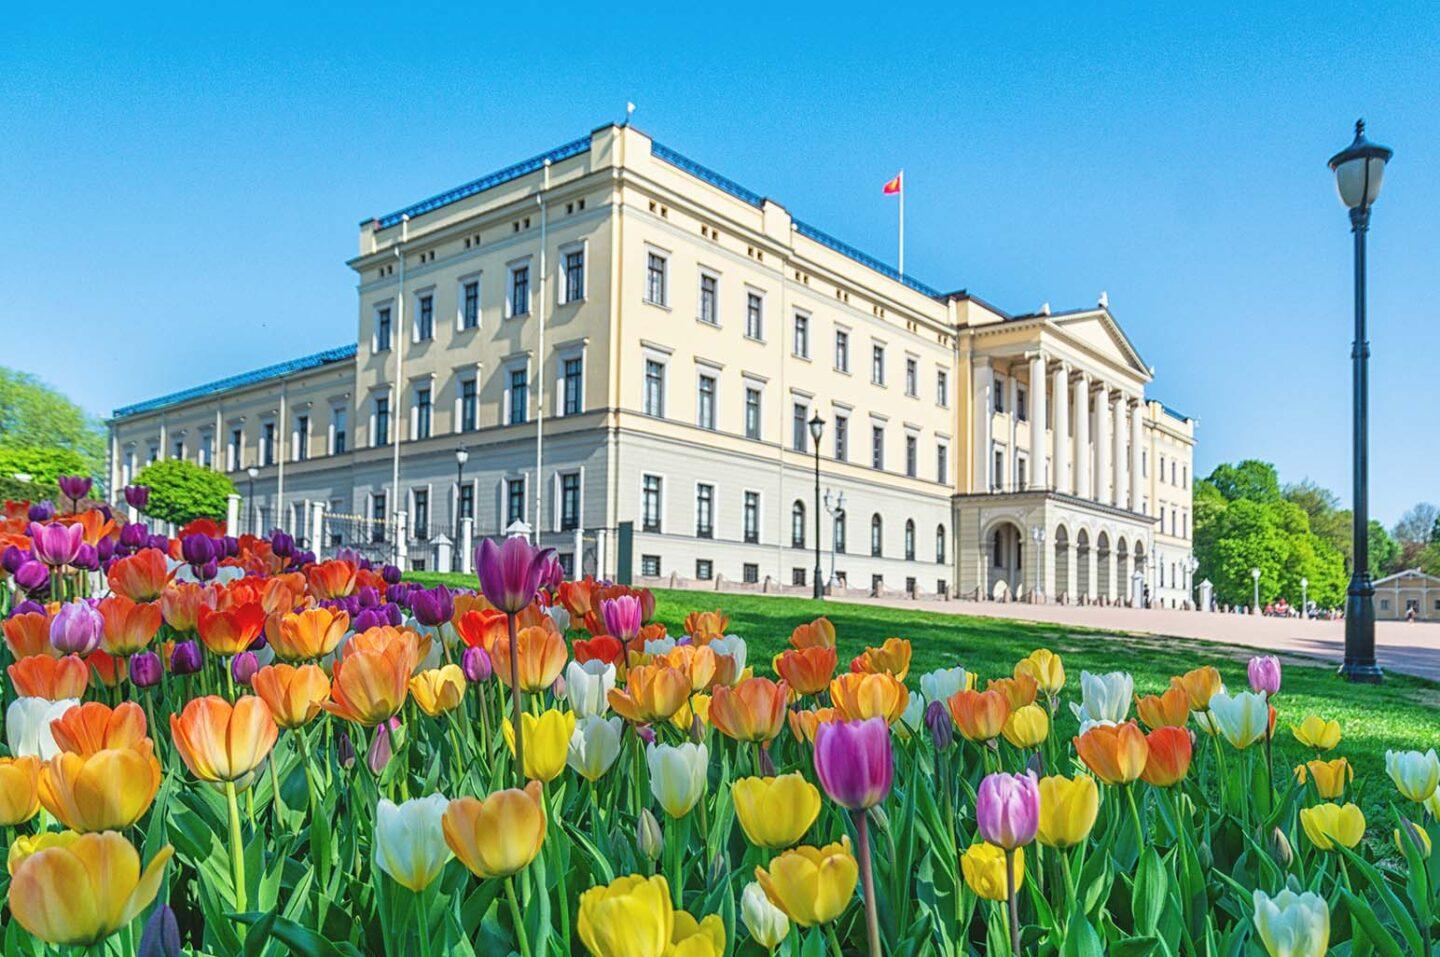 Royal Scandinavia: Visiting the Palaces of the North